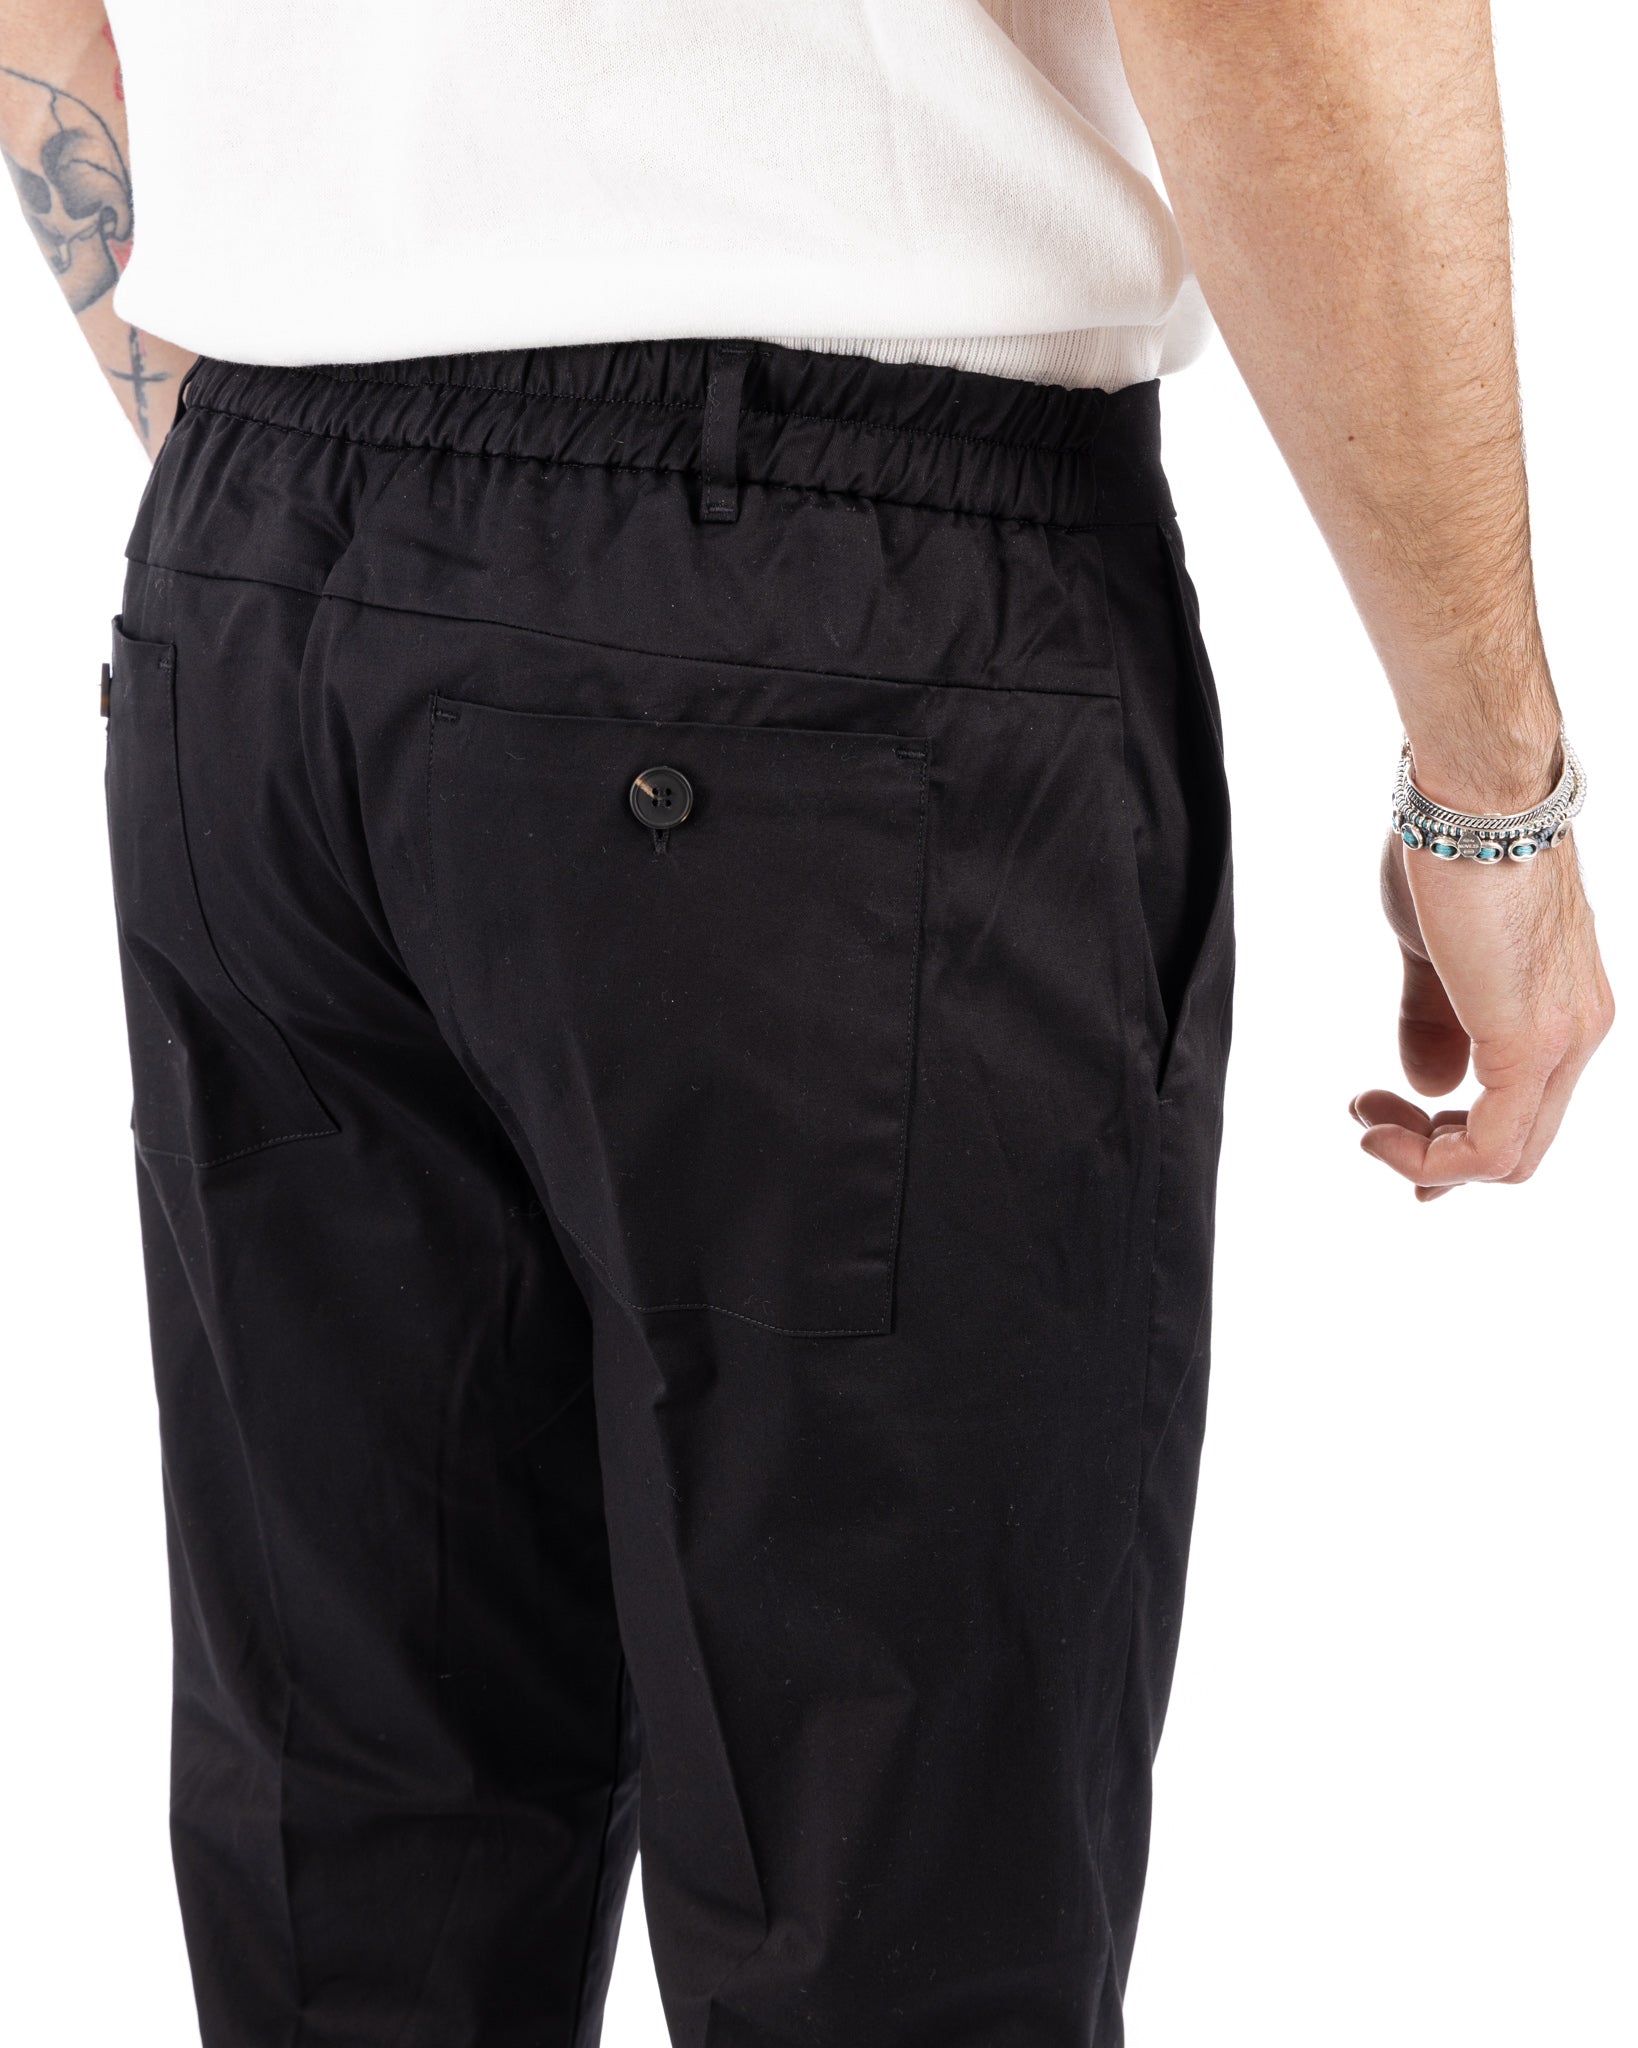 Elder - black capri trousers in summer cotton